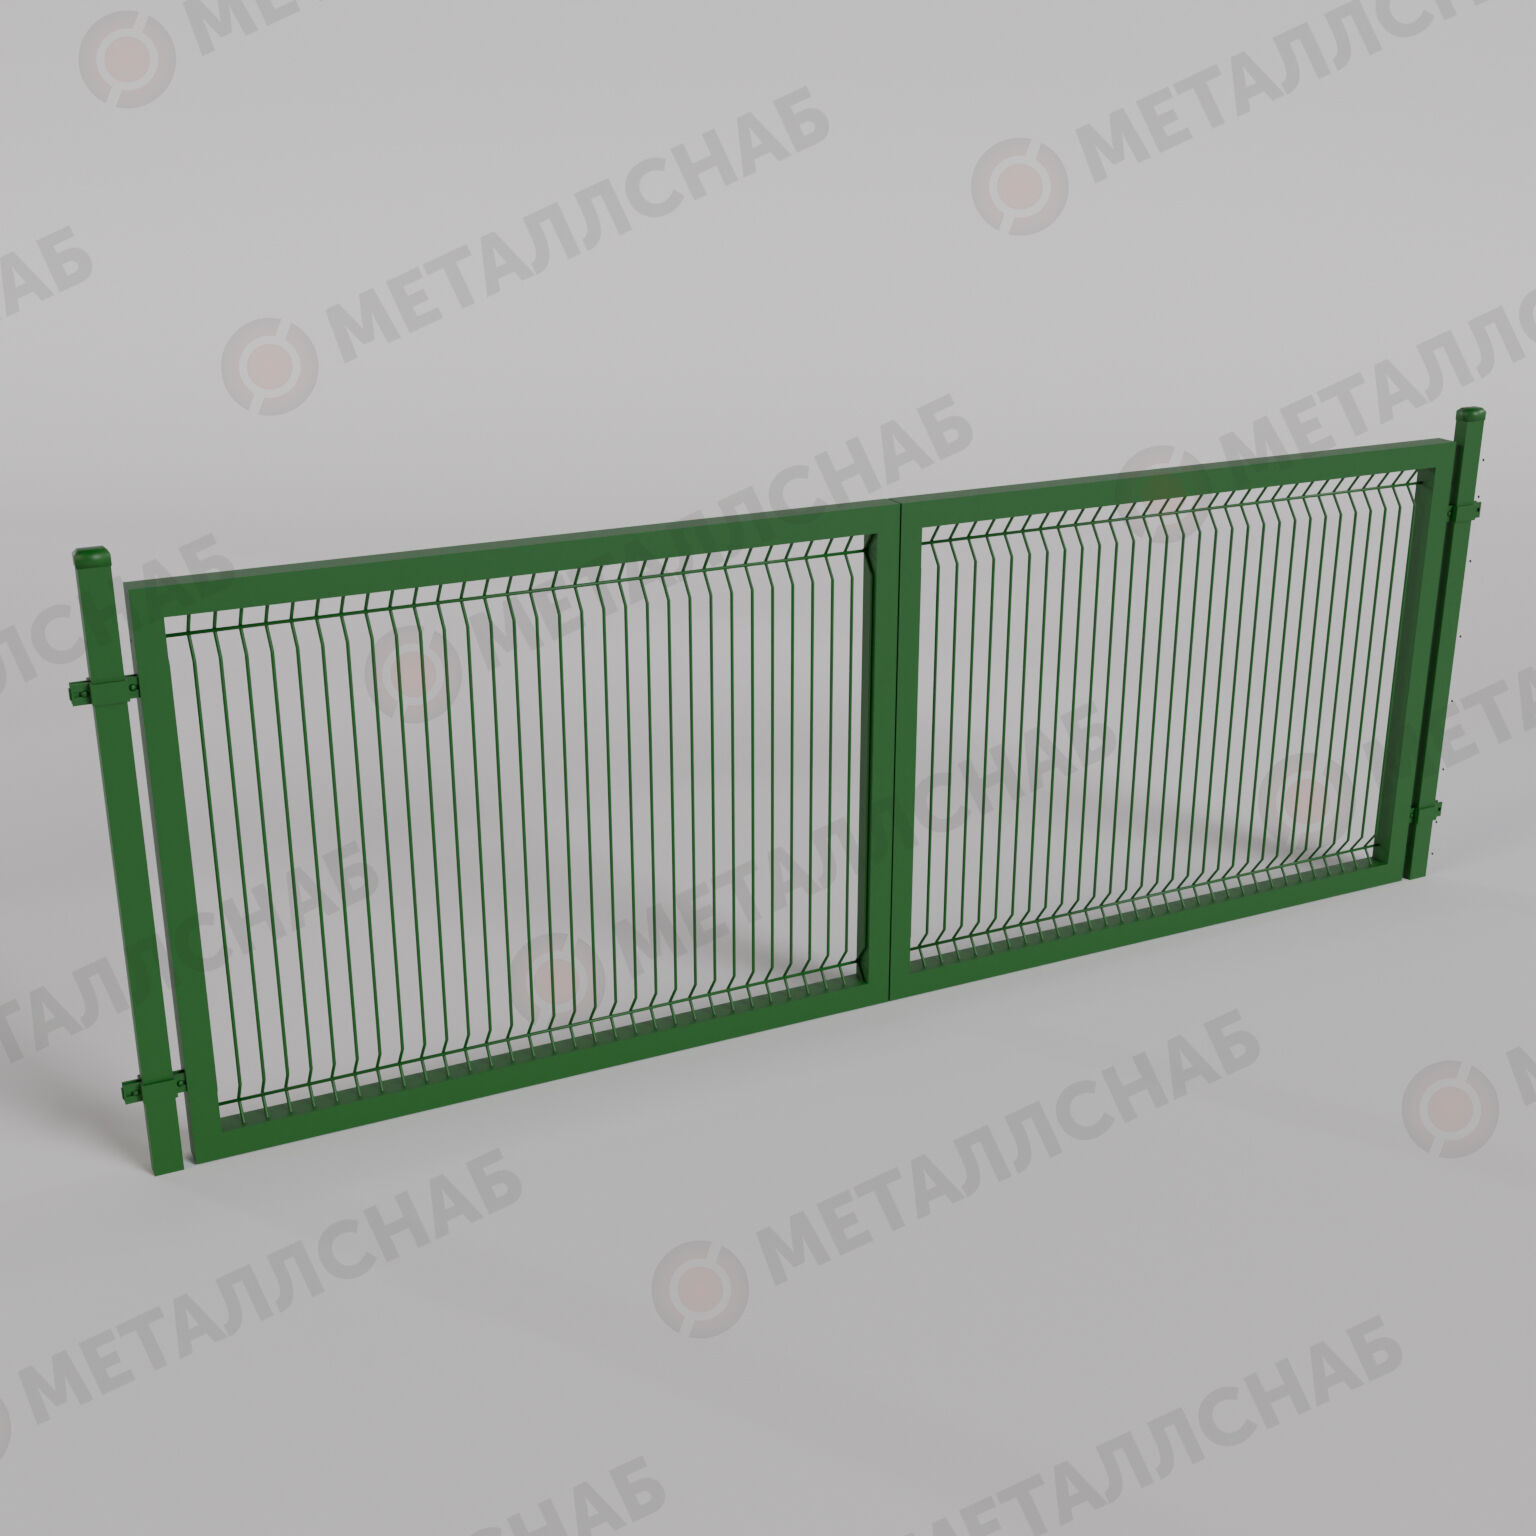 Ворота для 3D забора зеленые (RAL 6005) распашные 2000х4000 мм